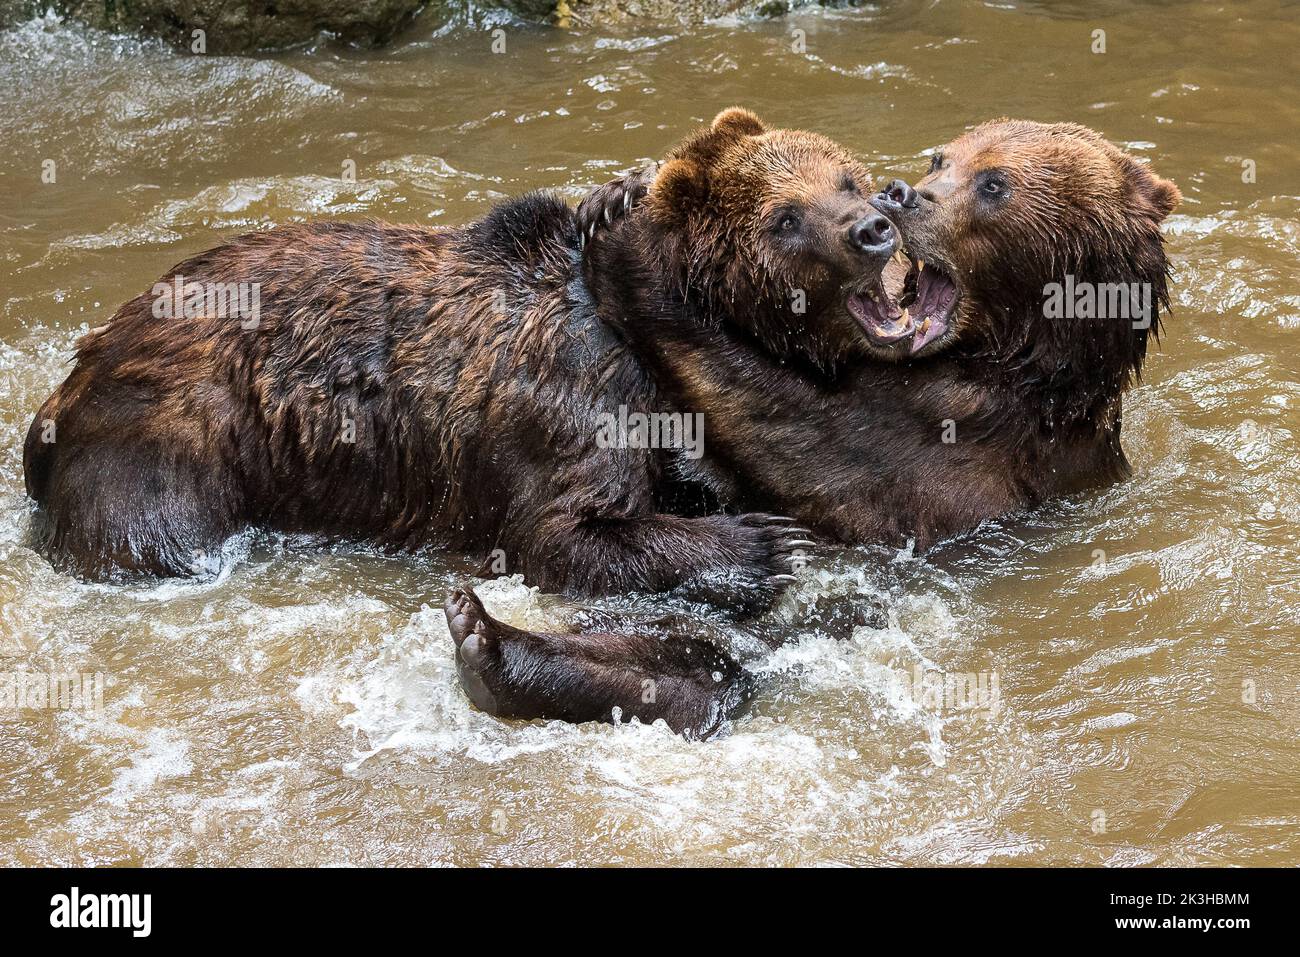 Kamchatka bears fighting in water Stock Photo